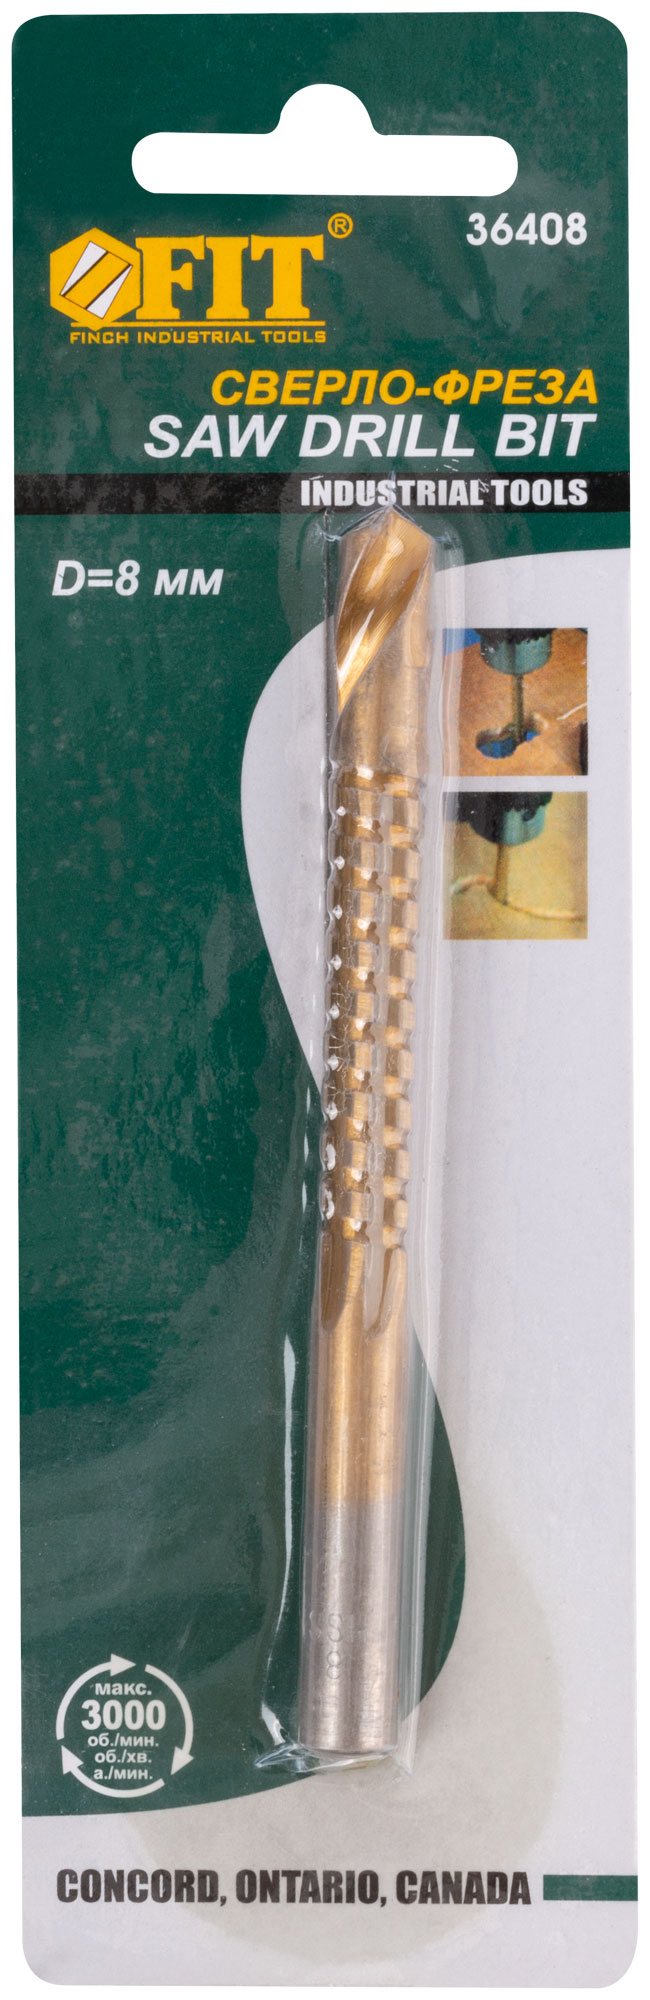 Сверло-фреза универсальное 8 мм. FIT 36408 универсальное моющее средство аквагель